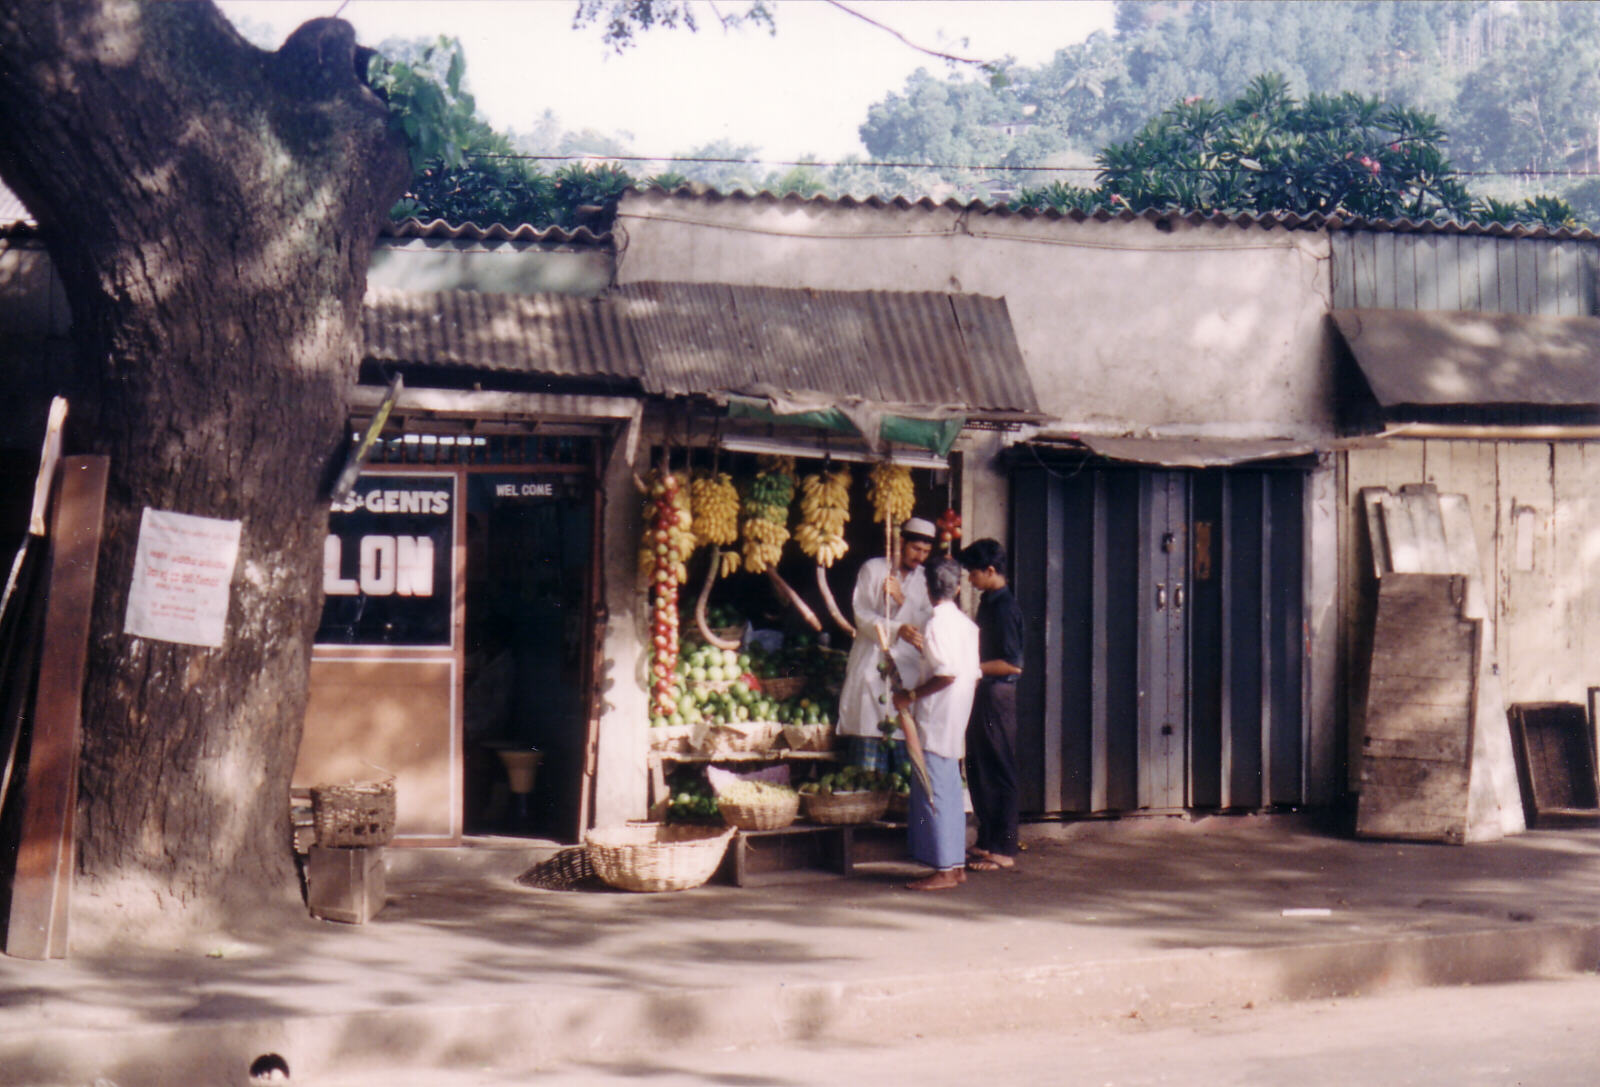 A greengrocers shop in Station Road, Kandy, Sri Lanka